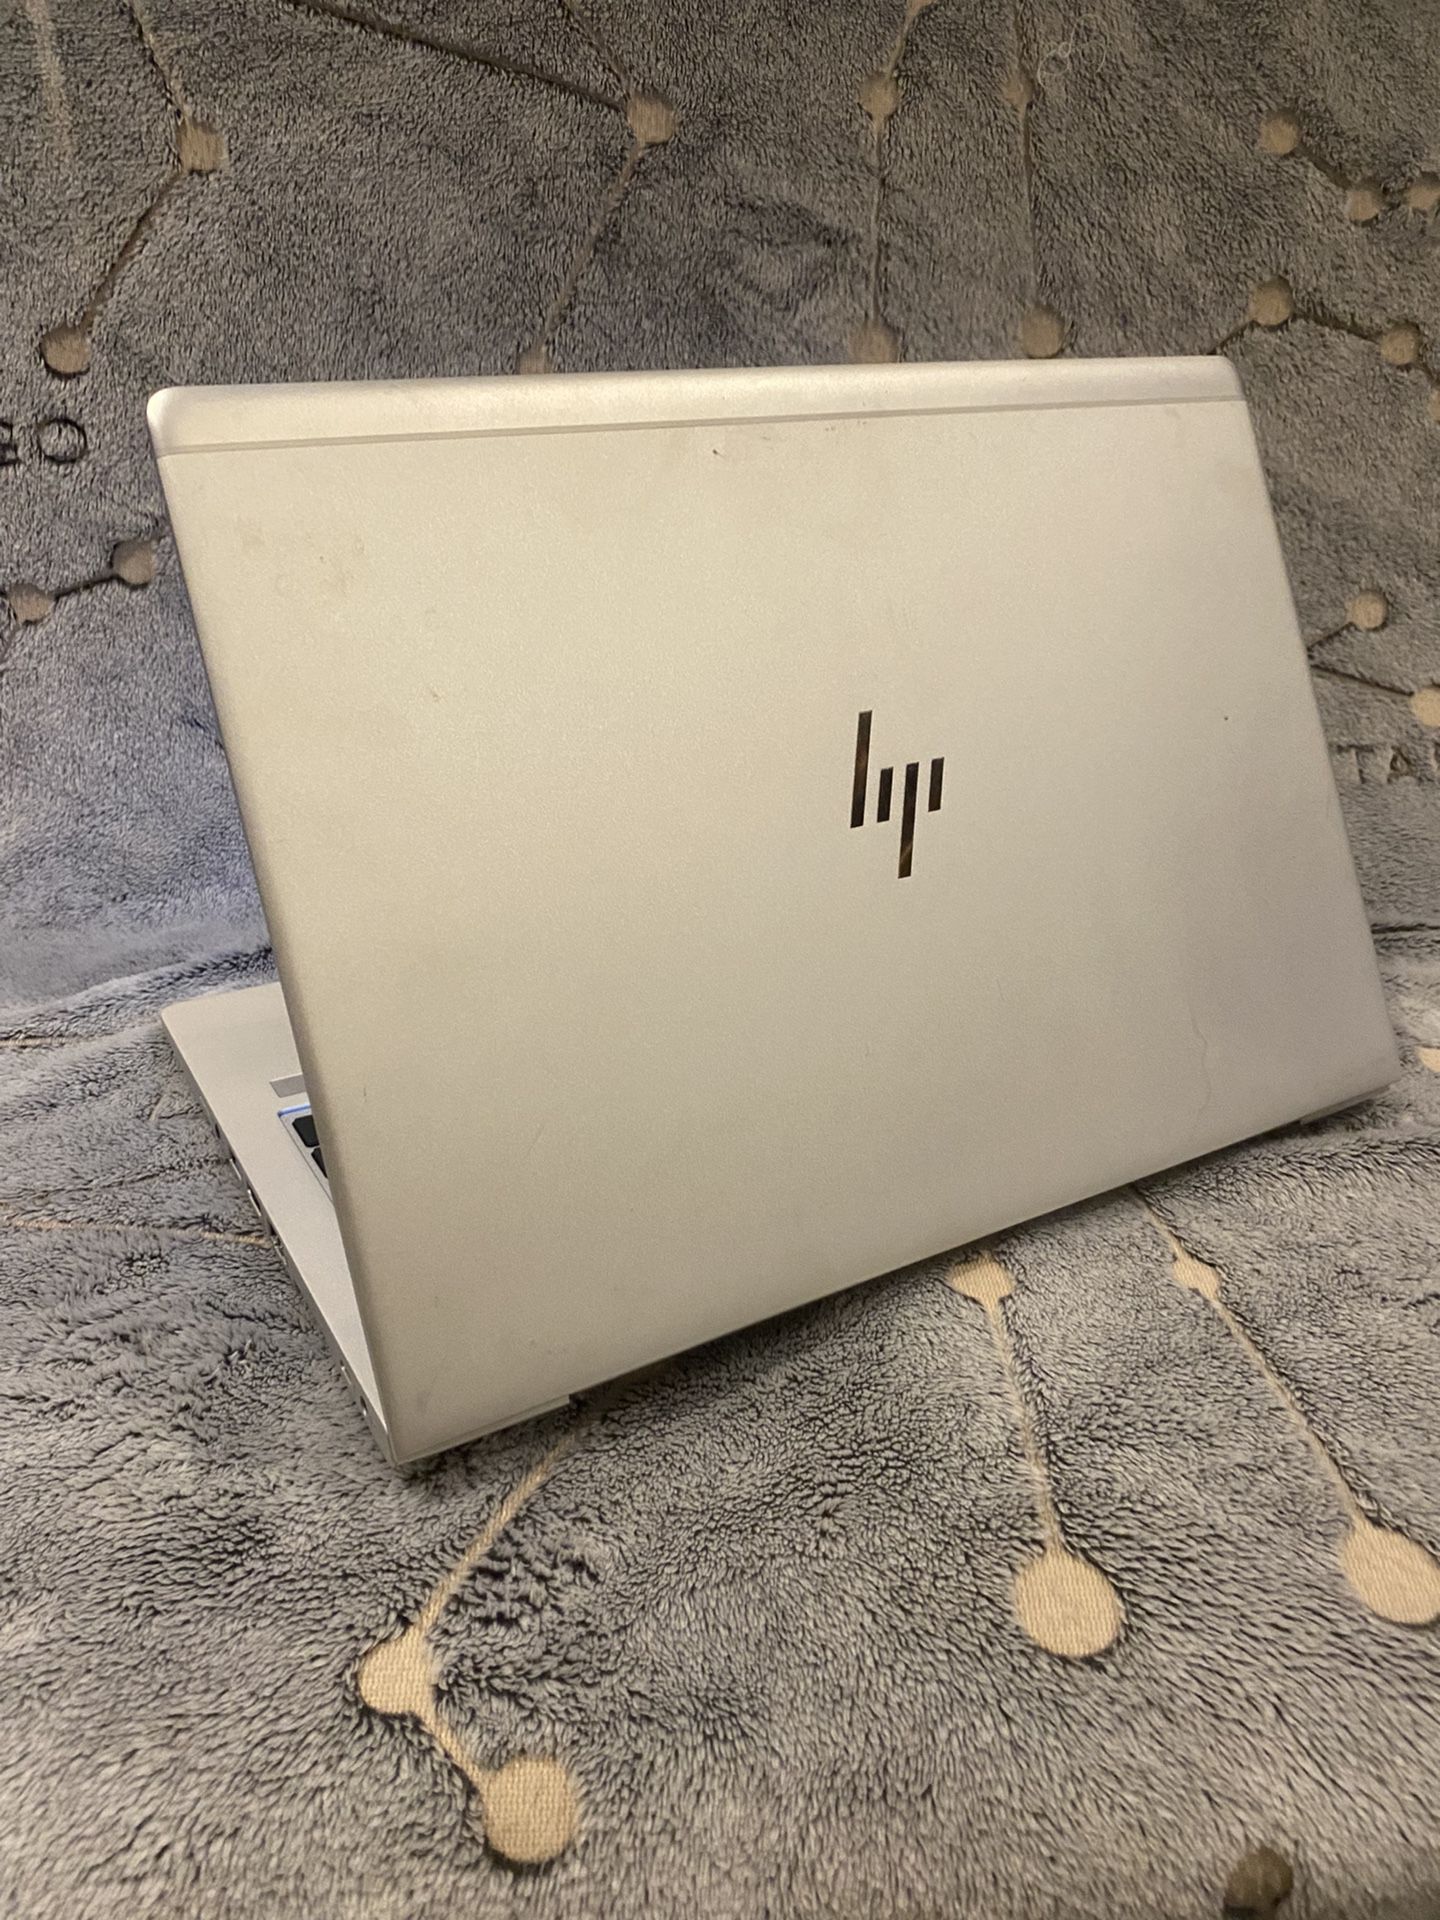 Hp Elitebook 840 G5 Laptop $375